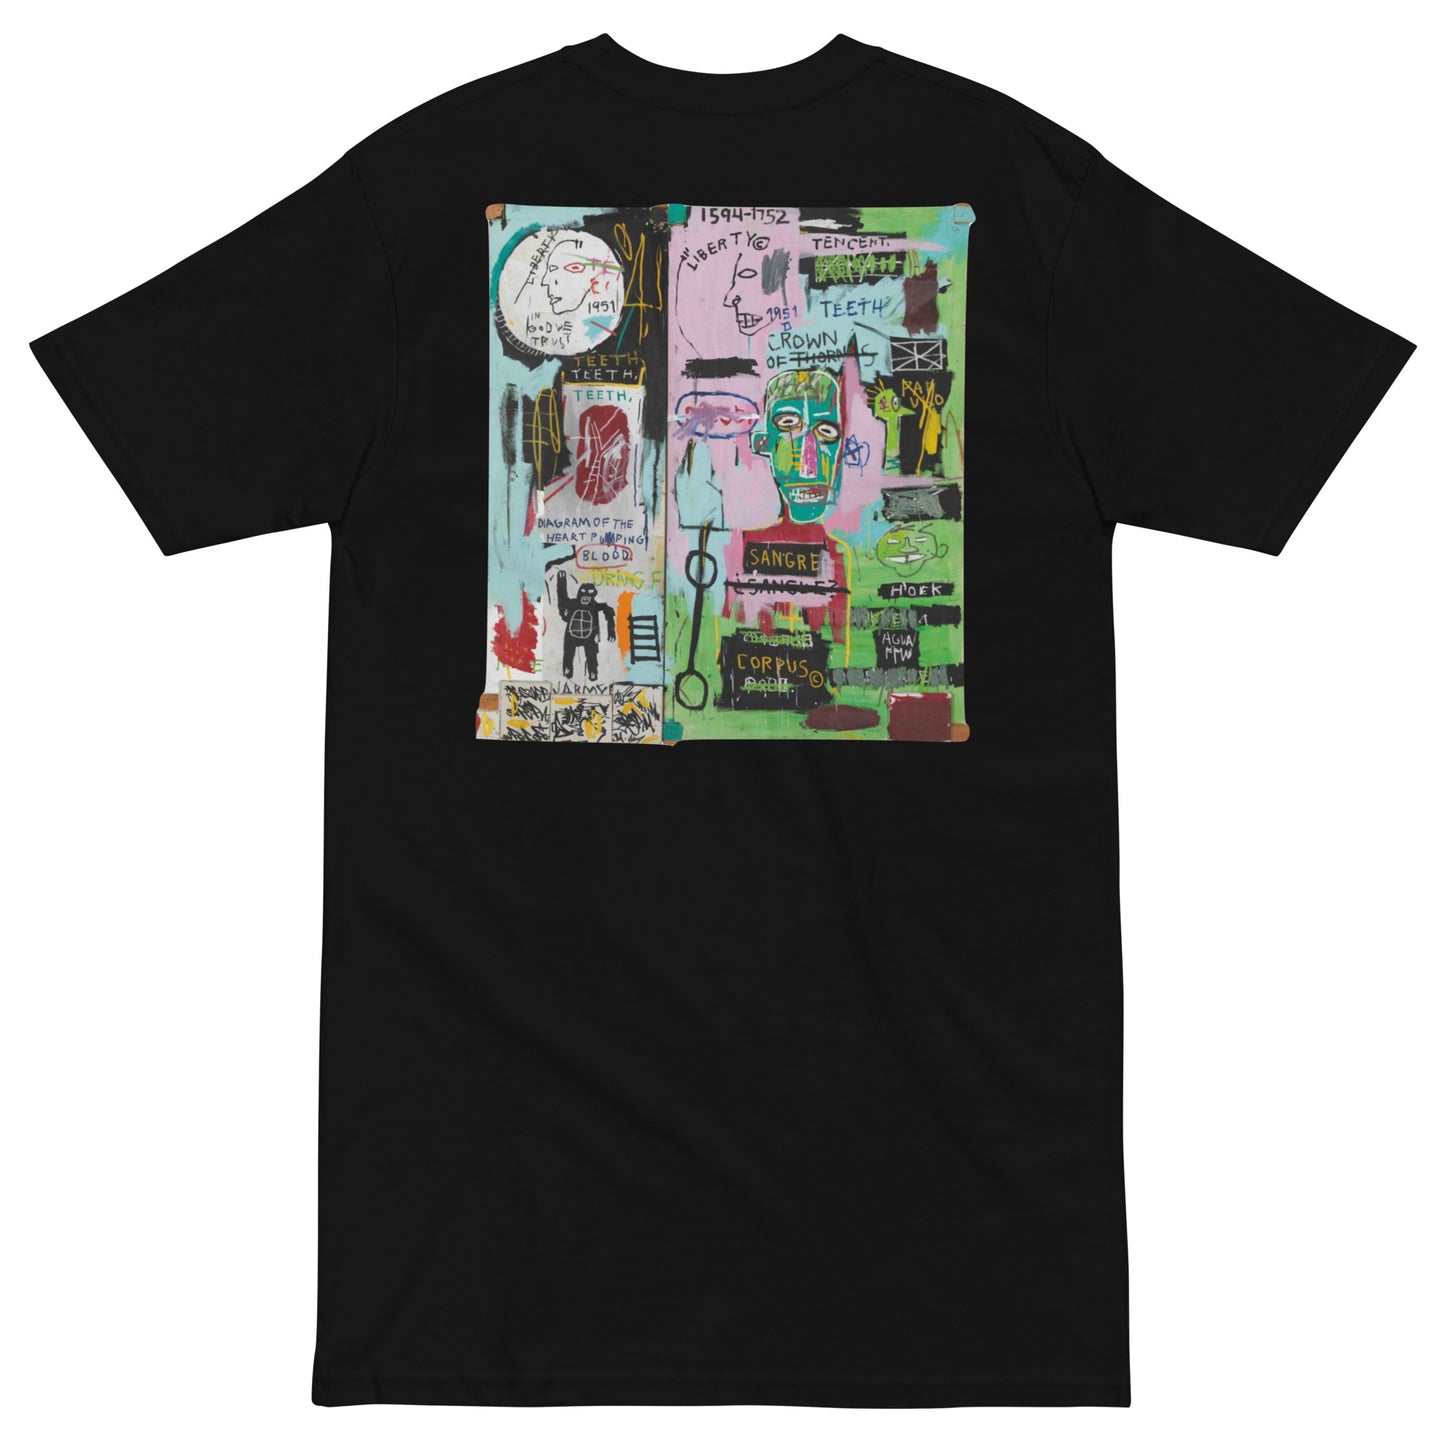 Jean-Michel Basquiat "In Italian" Artwork Embroidered and Printed Premium Streetwear T-Shirt Black